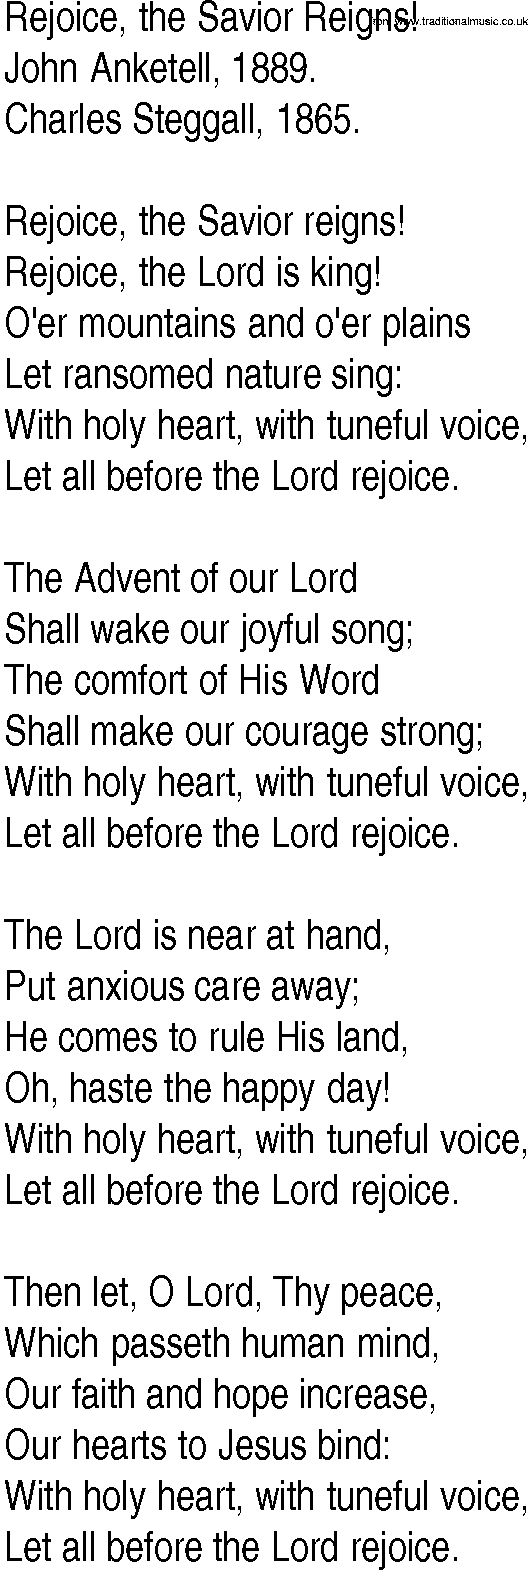 Hymn and Gospel Song: Rejoice, the Savior Reigns! by John Anketell lyrics